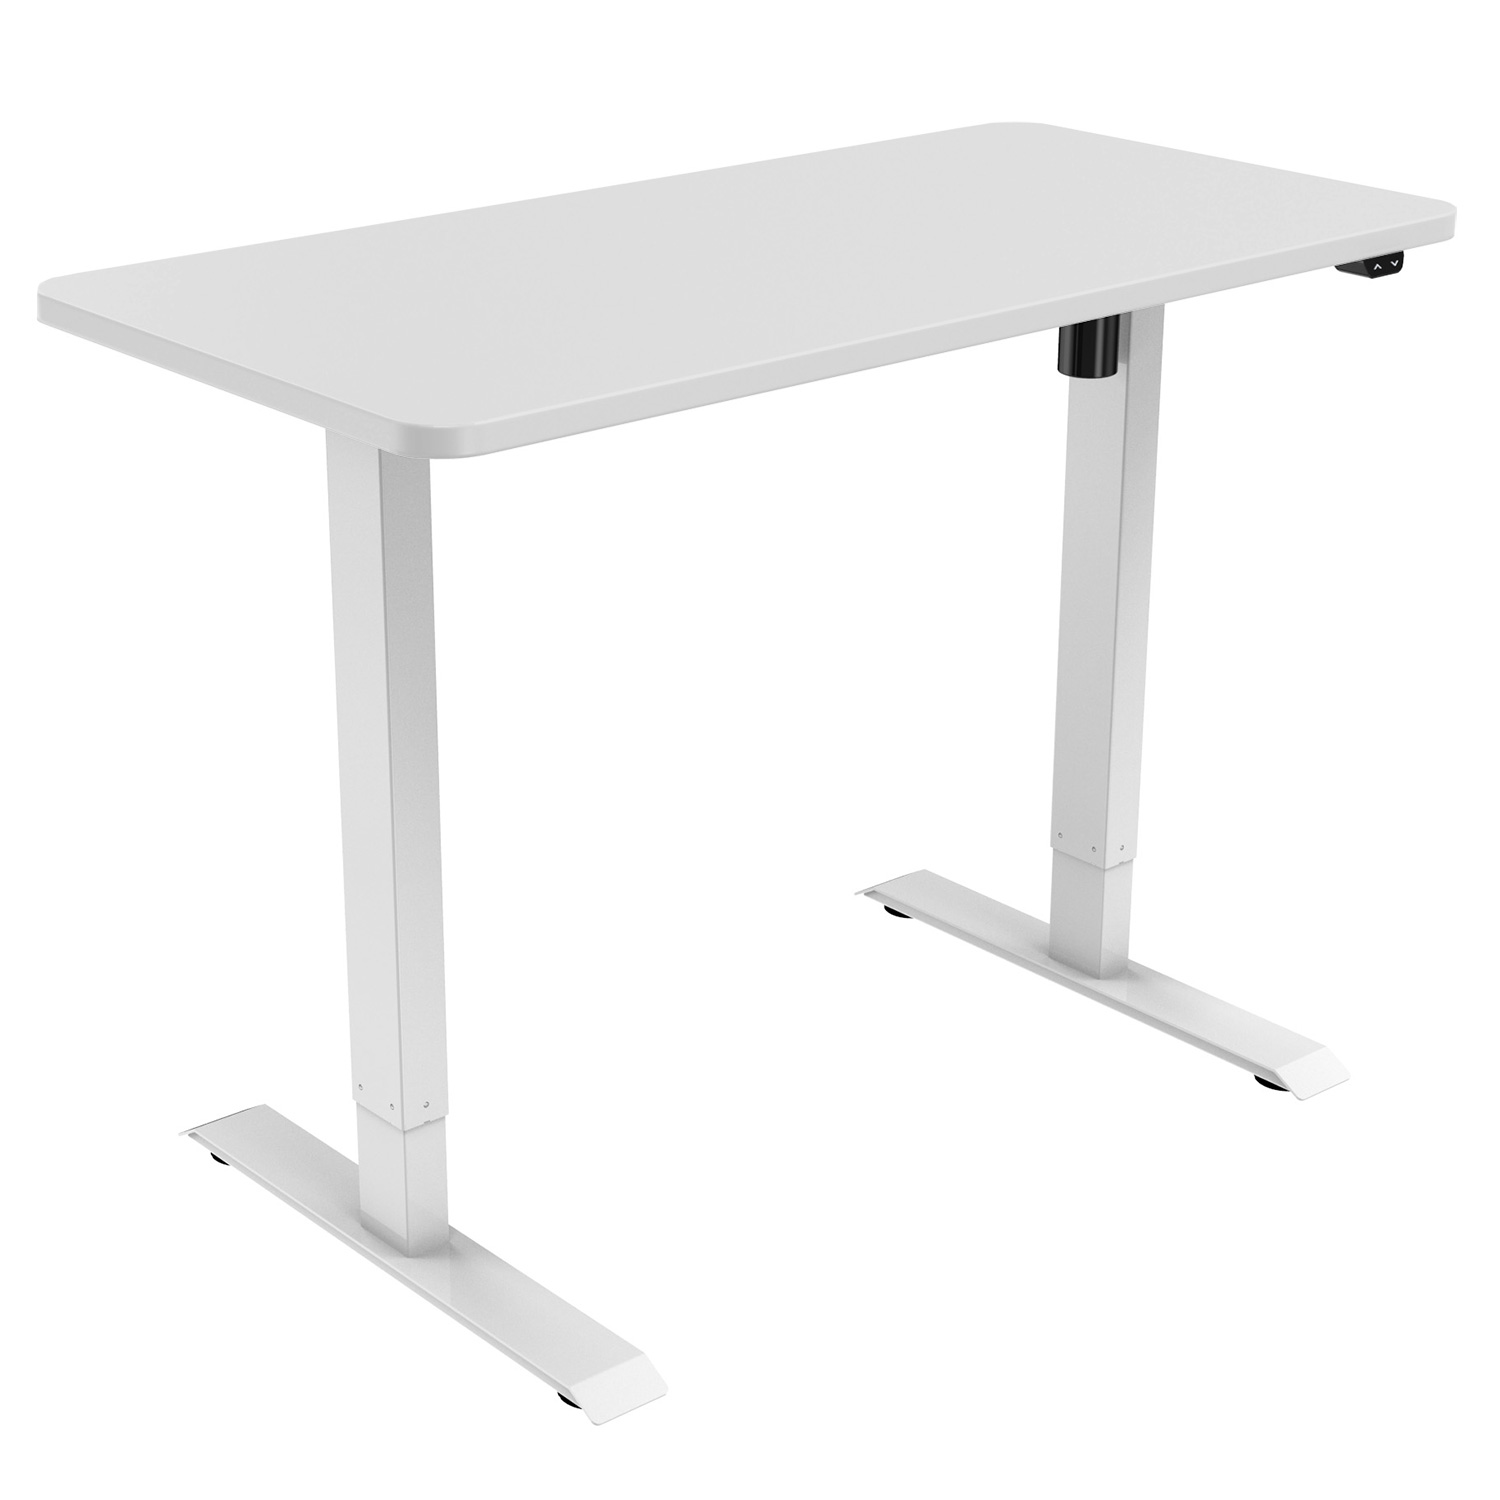 Allcam MFC Desk/ Table Top 1200x800 mm for Home/Office Sit-Stand Desks 